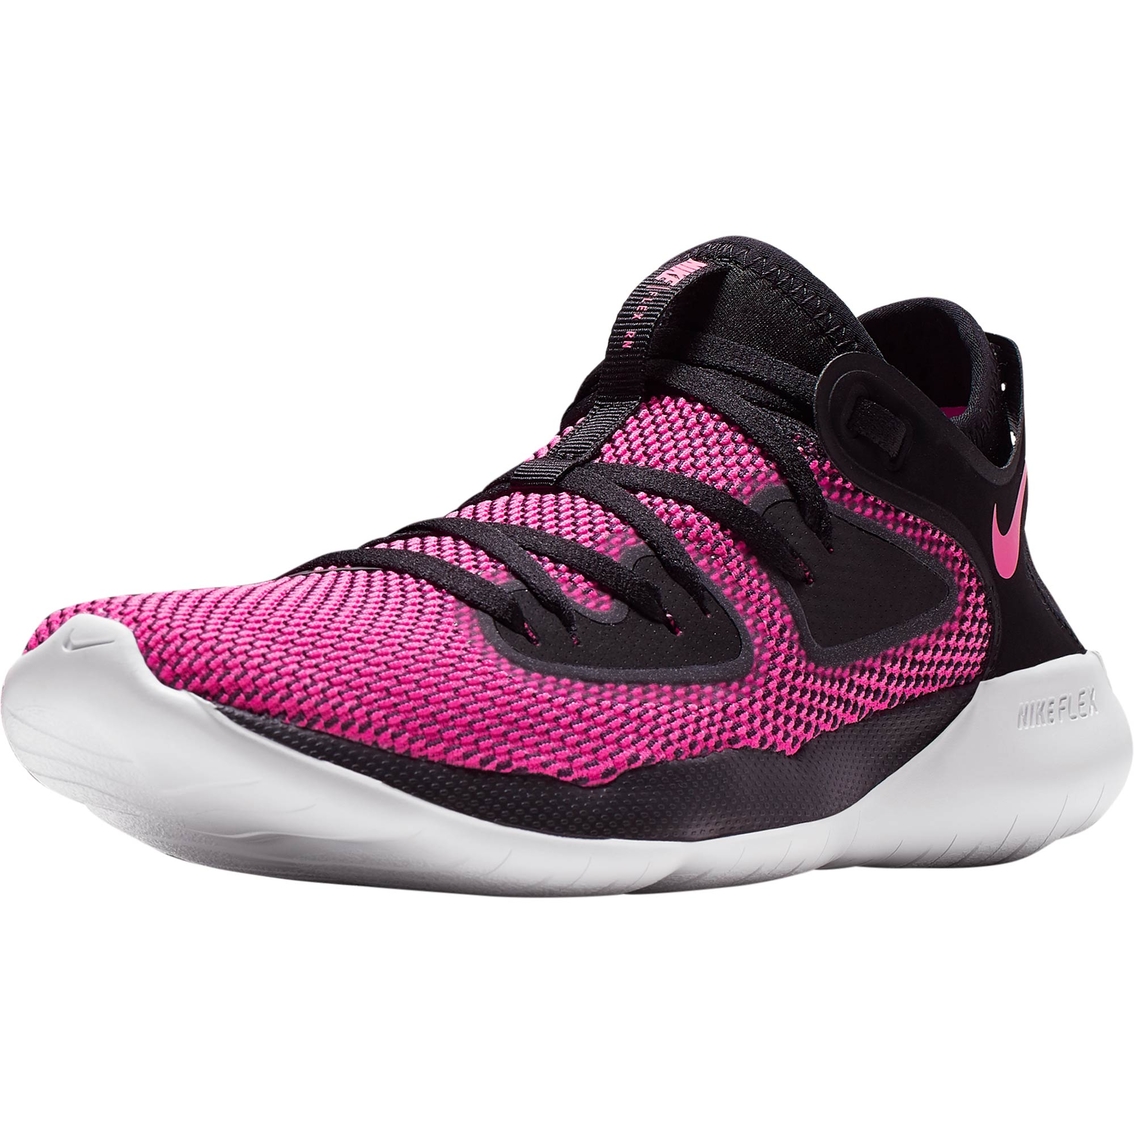 Nike Women's Flex Rn 2019 Running Shoes 